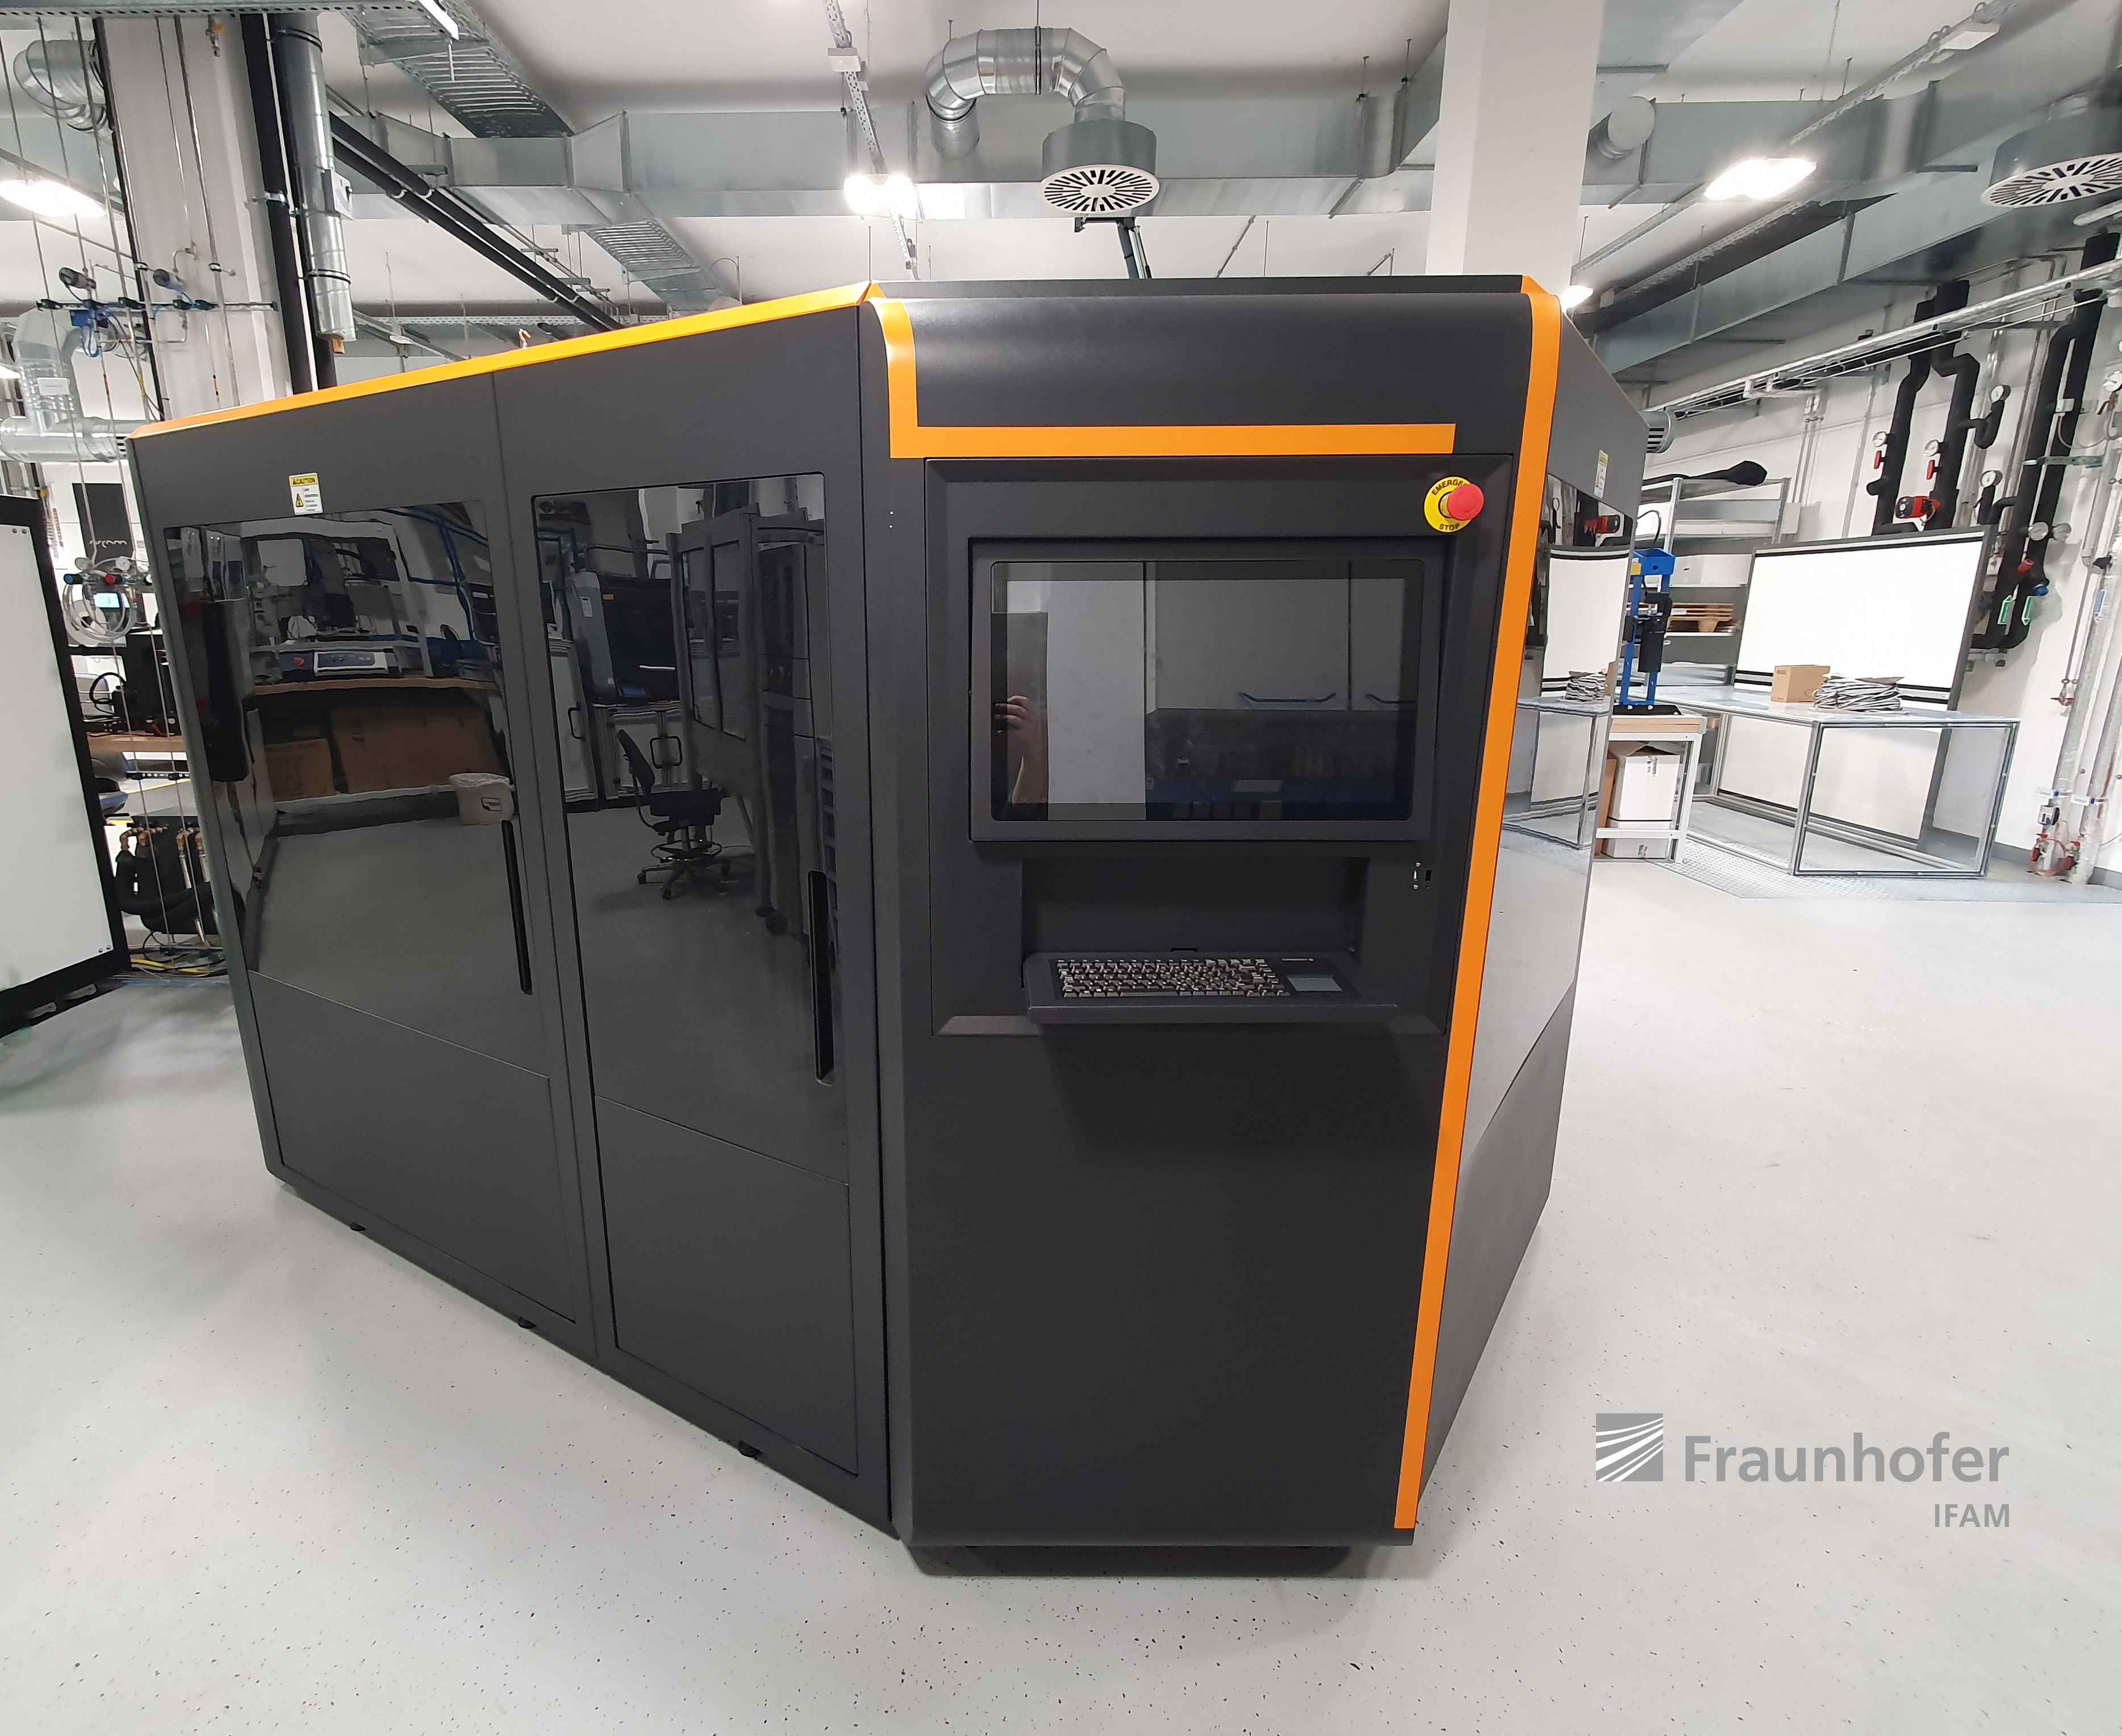 New MoldJet® printing system at Fraunhofer IFAM Dresden